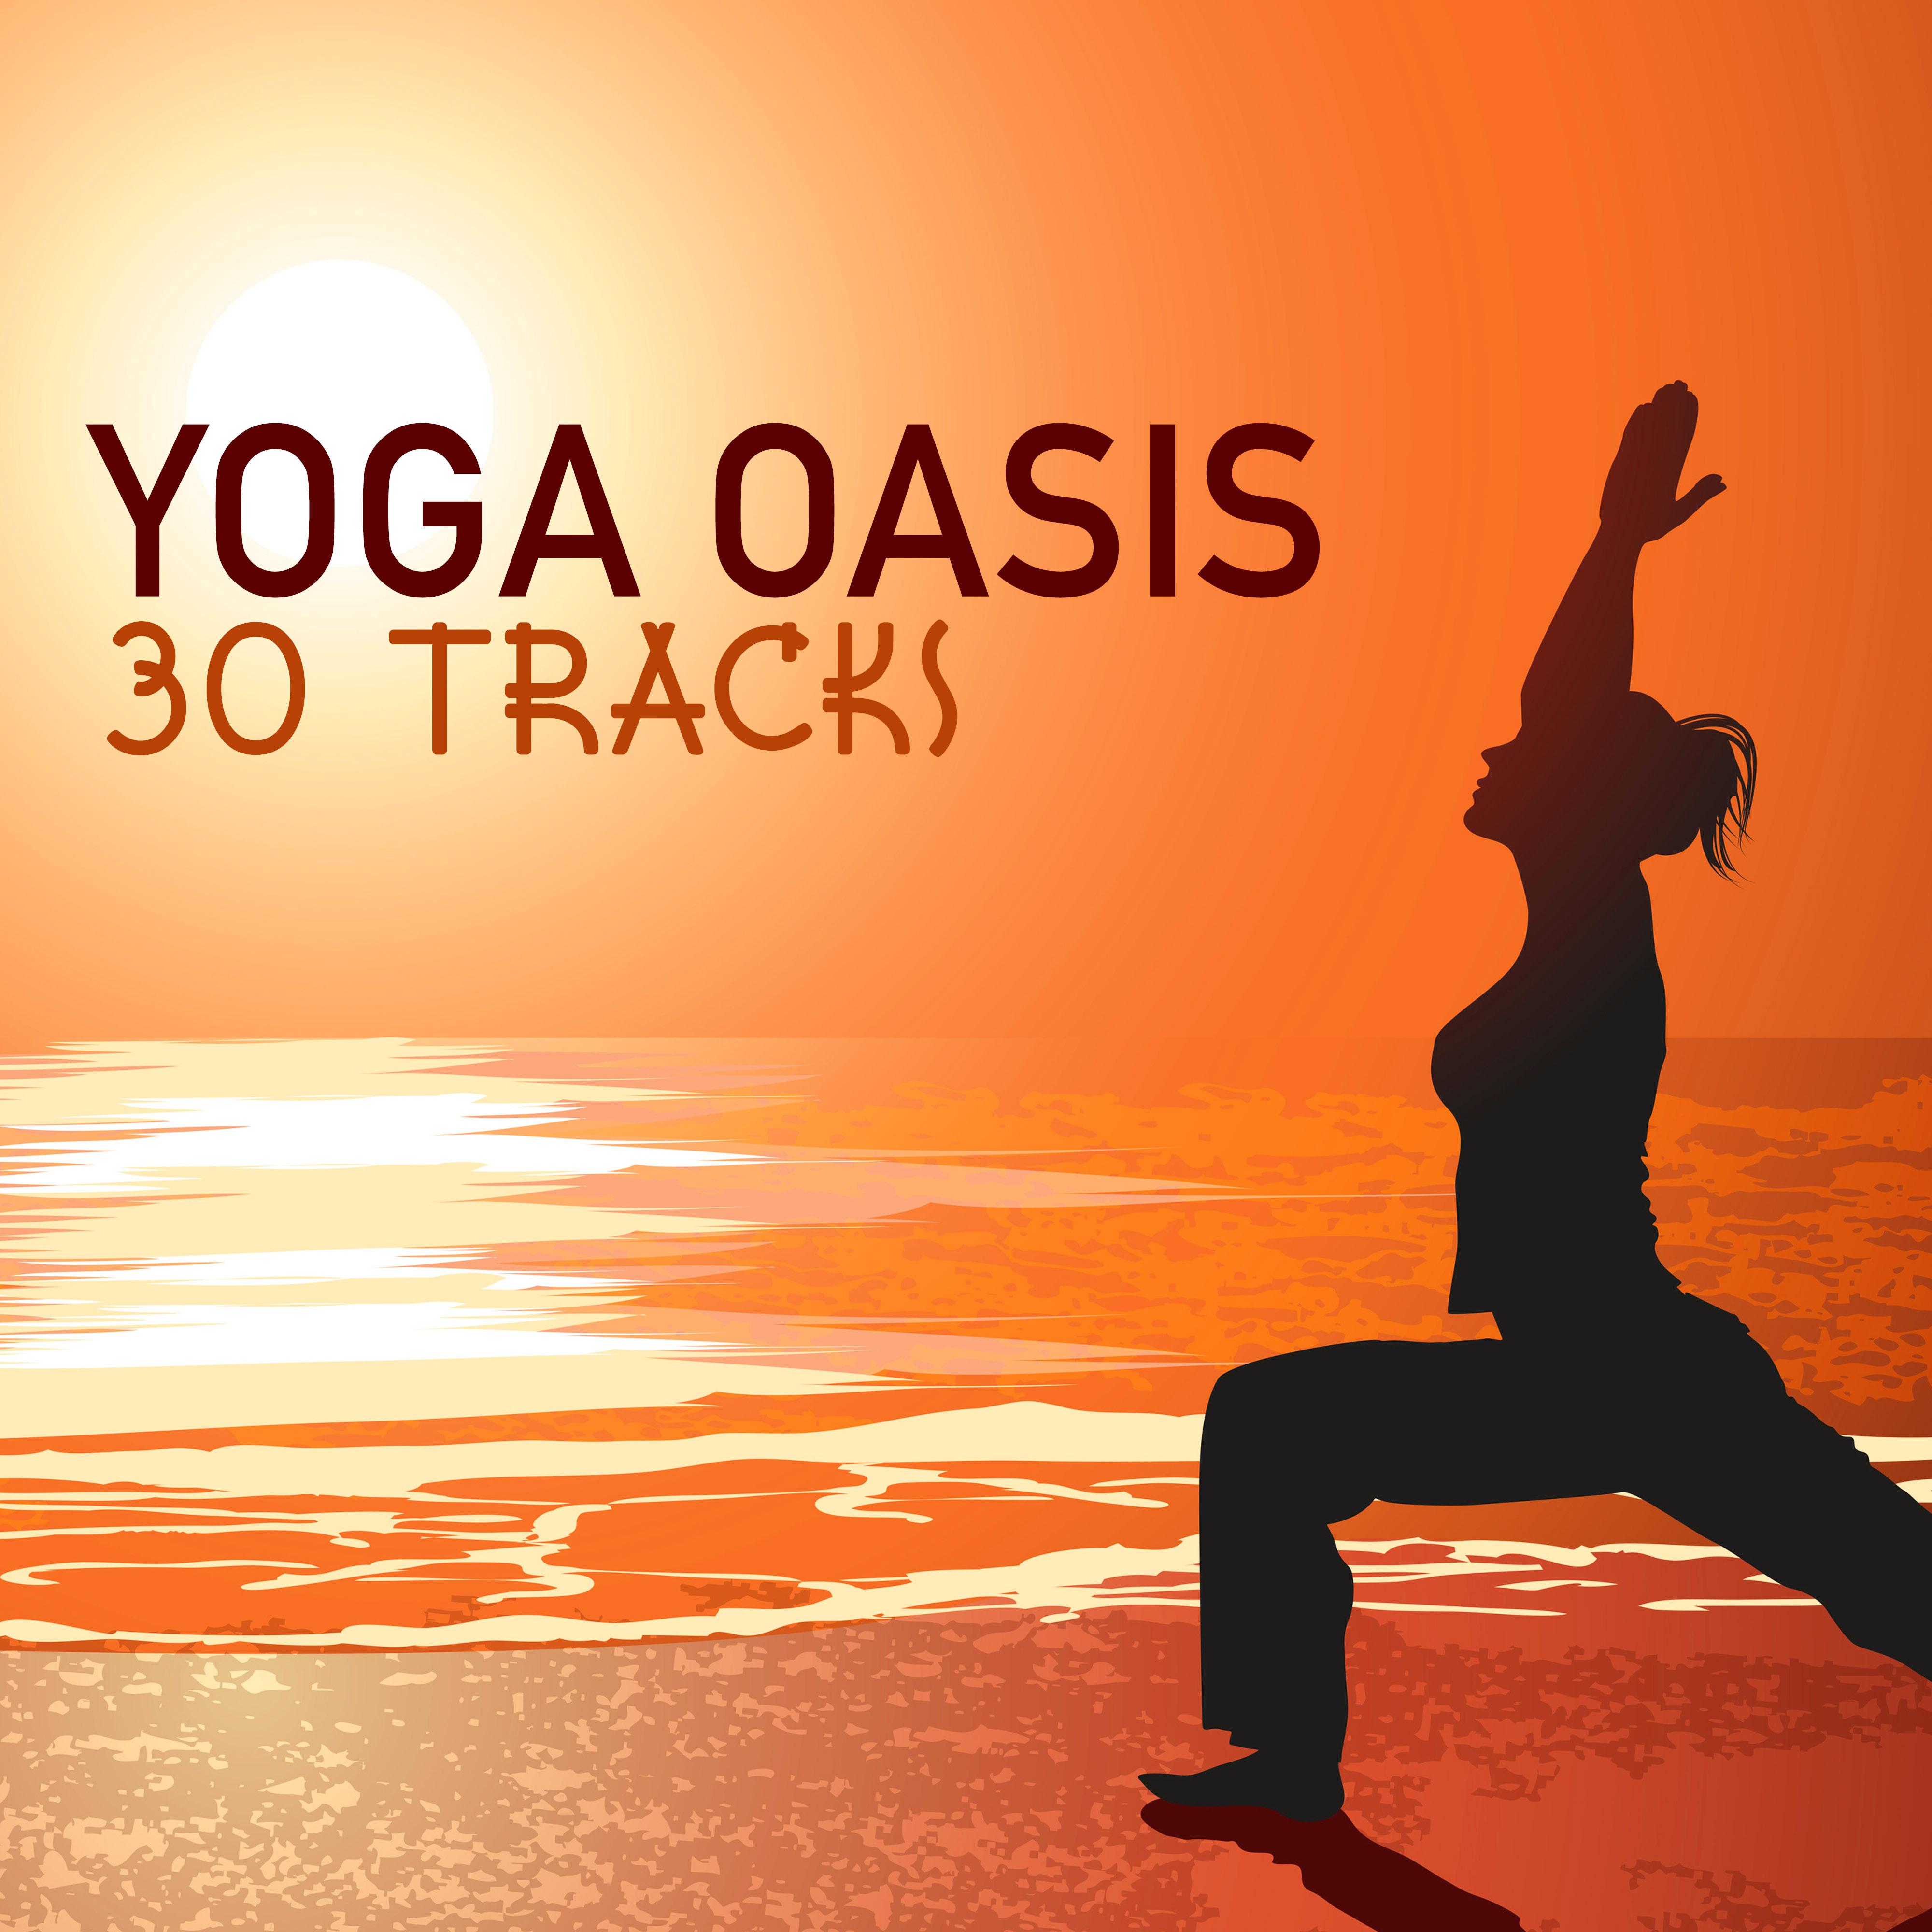 Yoga Oasis - 30 Tracks for Hatha, Kundalini & Mindfulness Yoga Techniques, Sounds of Nature Asian Meditation Music